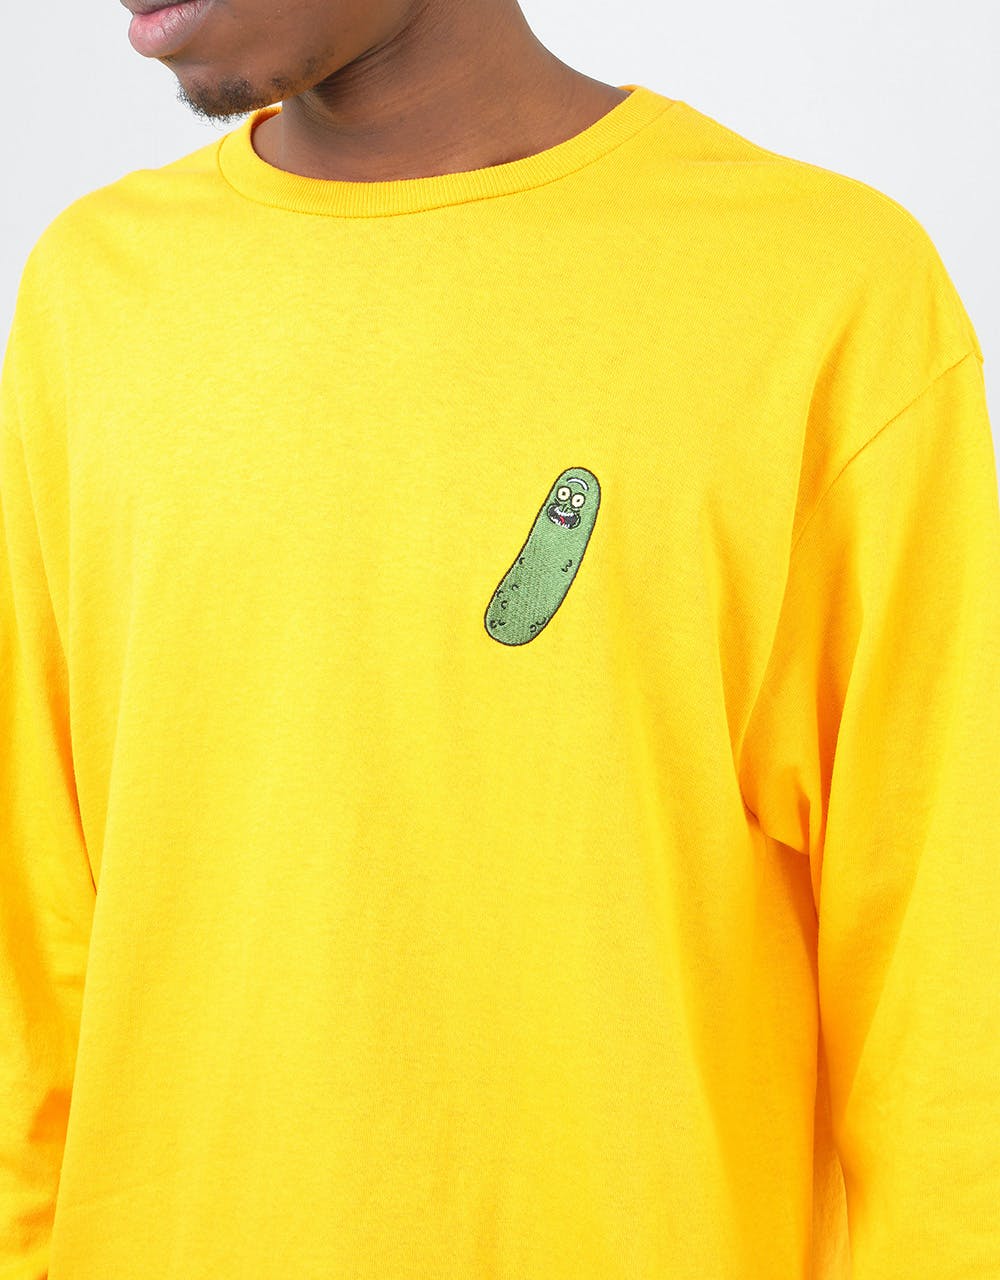 Primitive x Rick & Morty Pickle Rick L/S T-Shirt - Gold